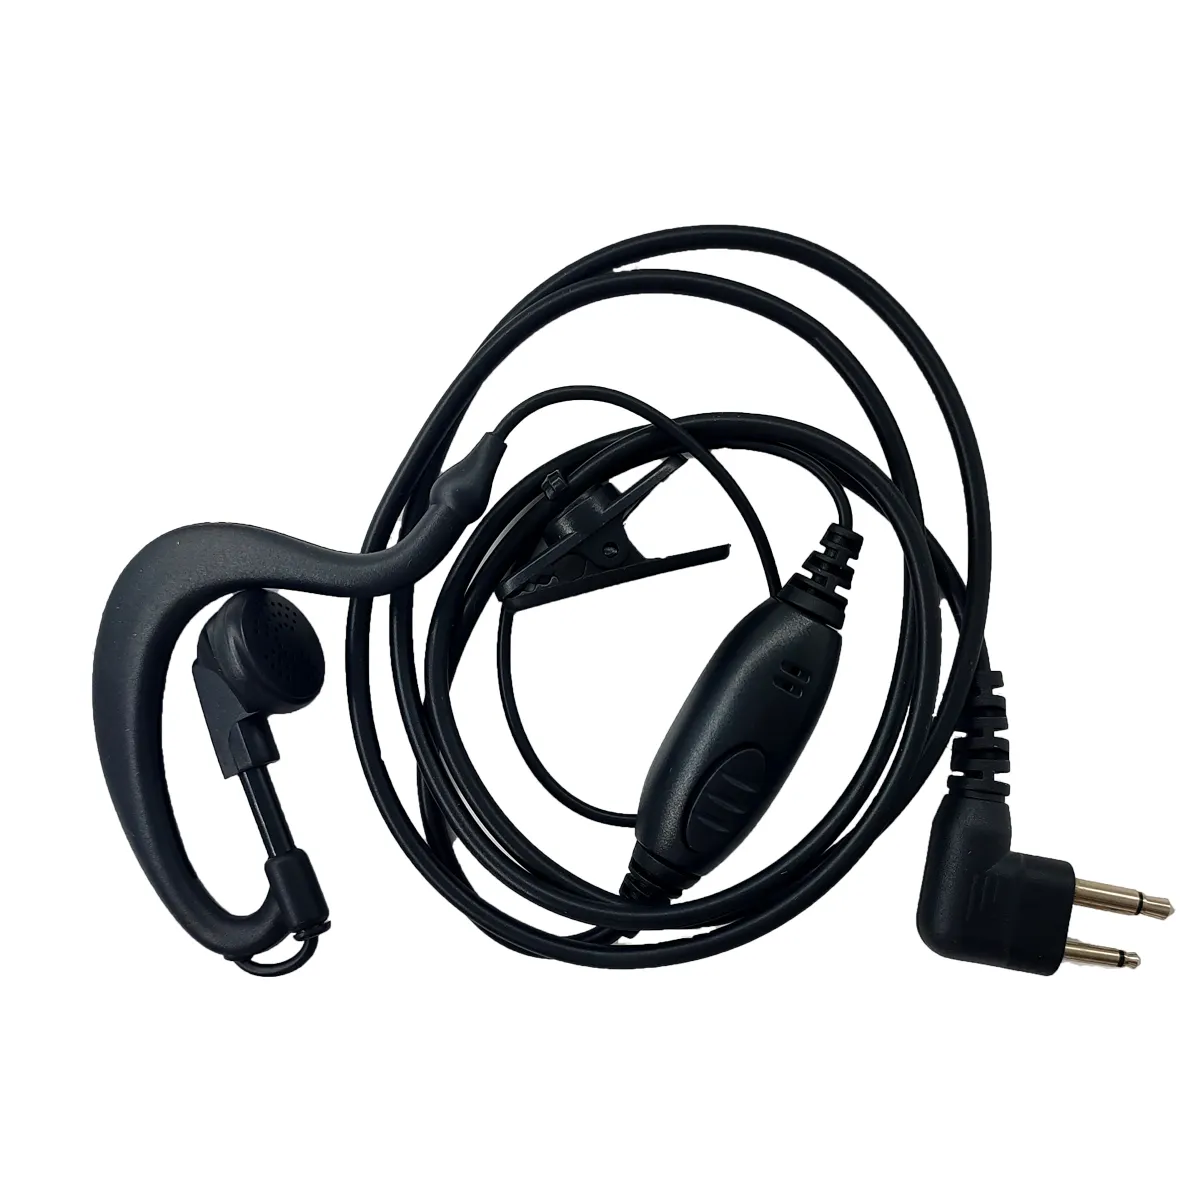 Headset walkie talkie jelas ptt vox light headset earpiece P102-PM01-G3 kualitas tinggi